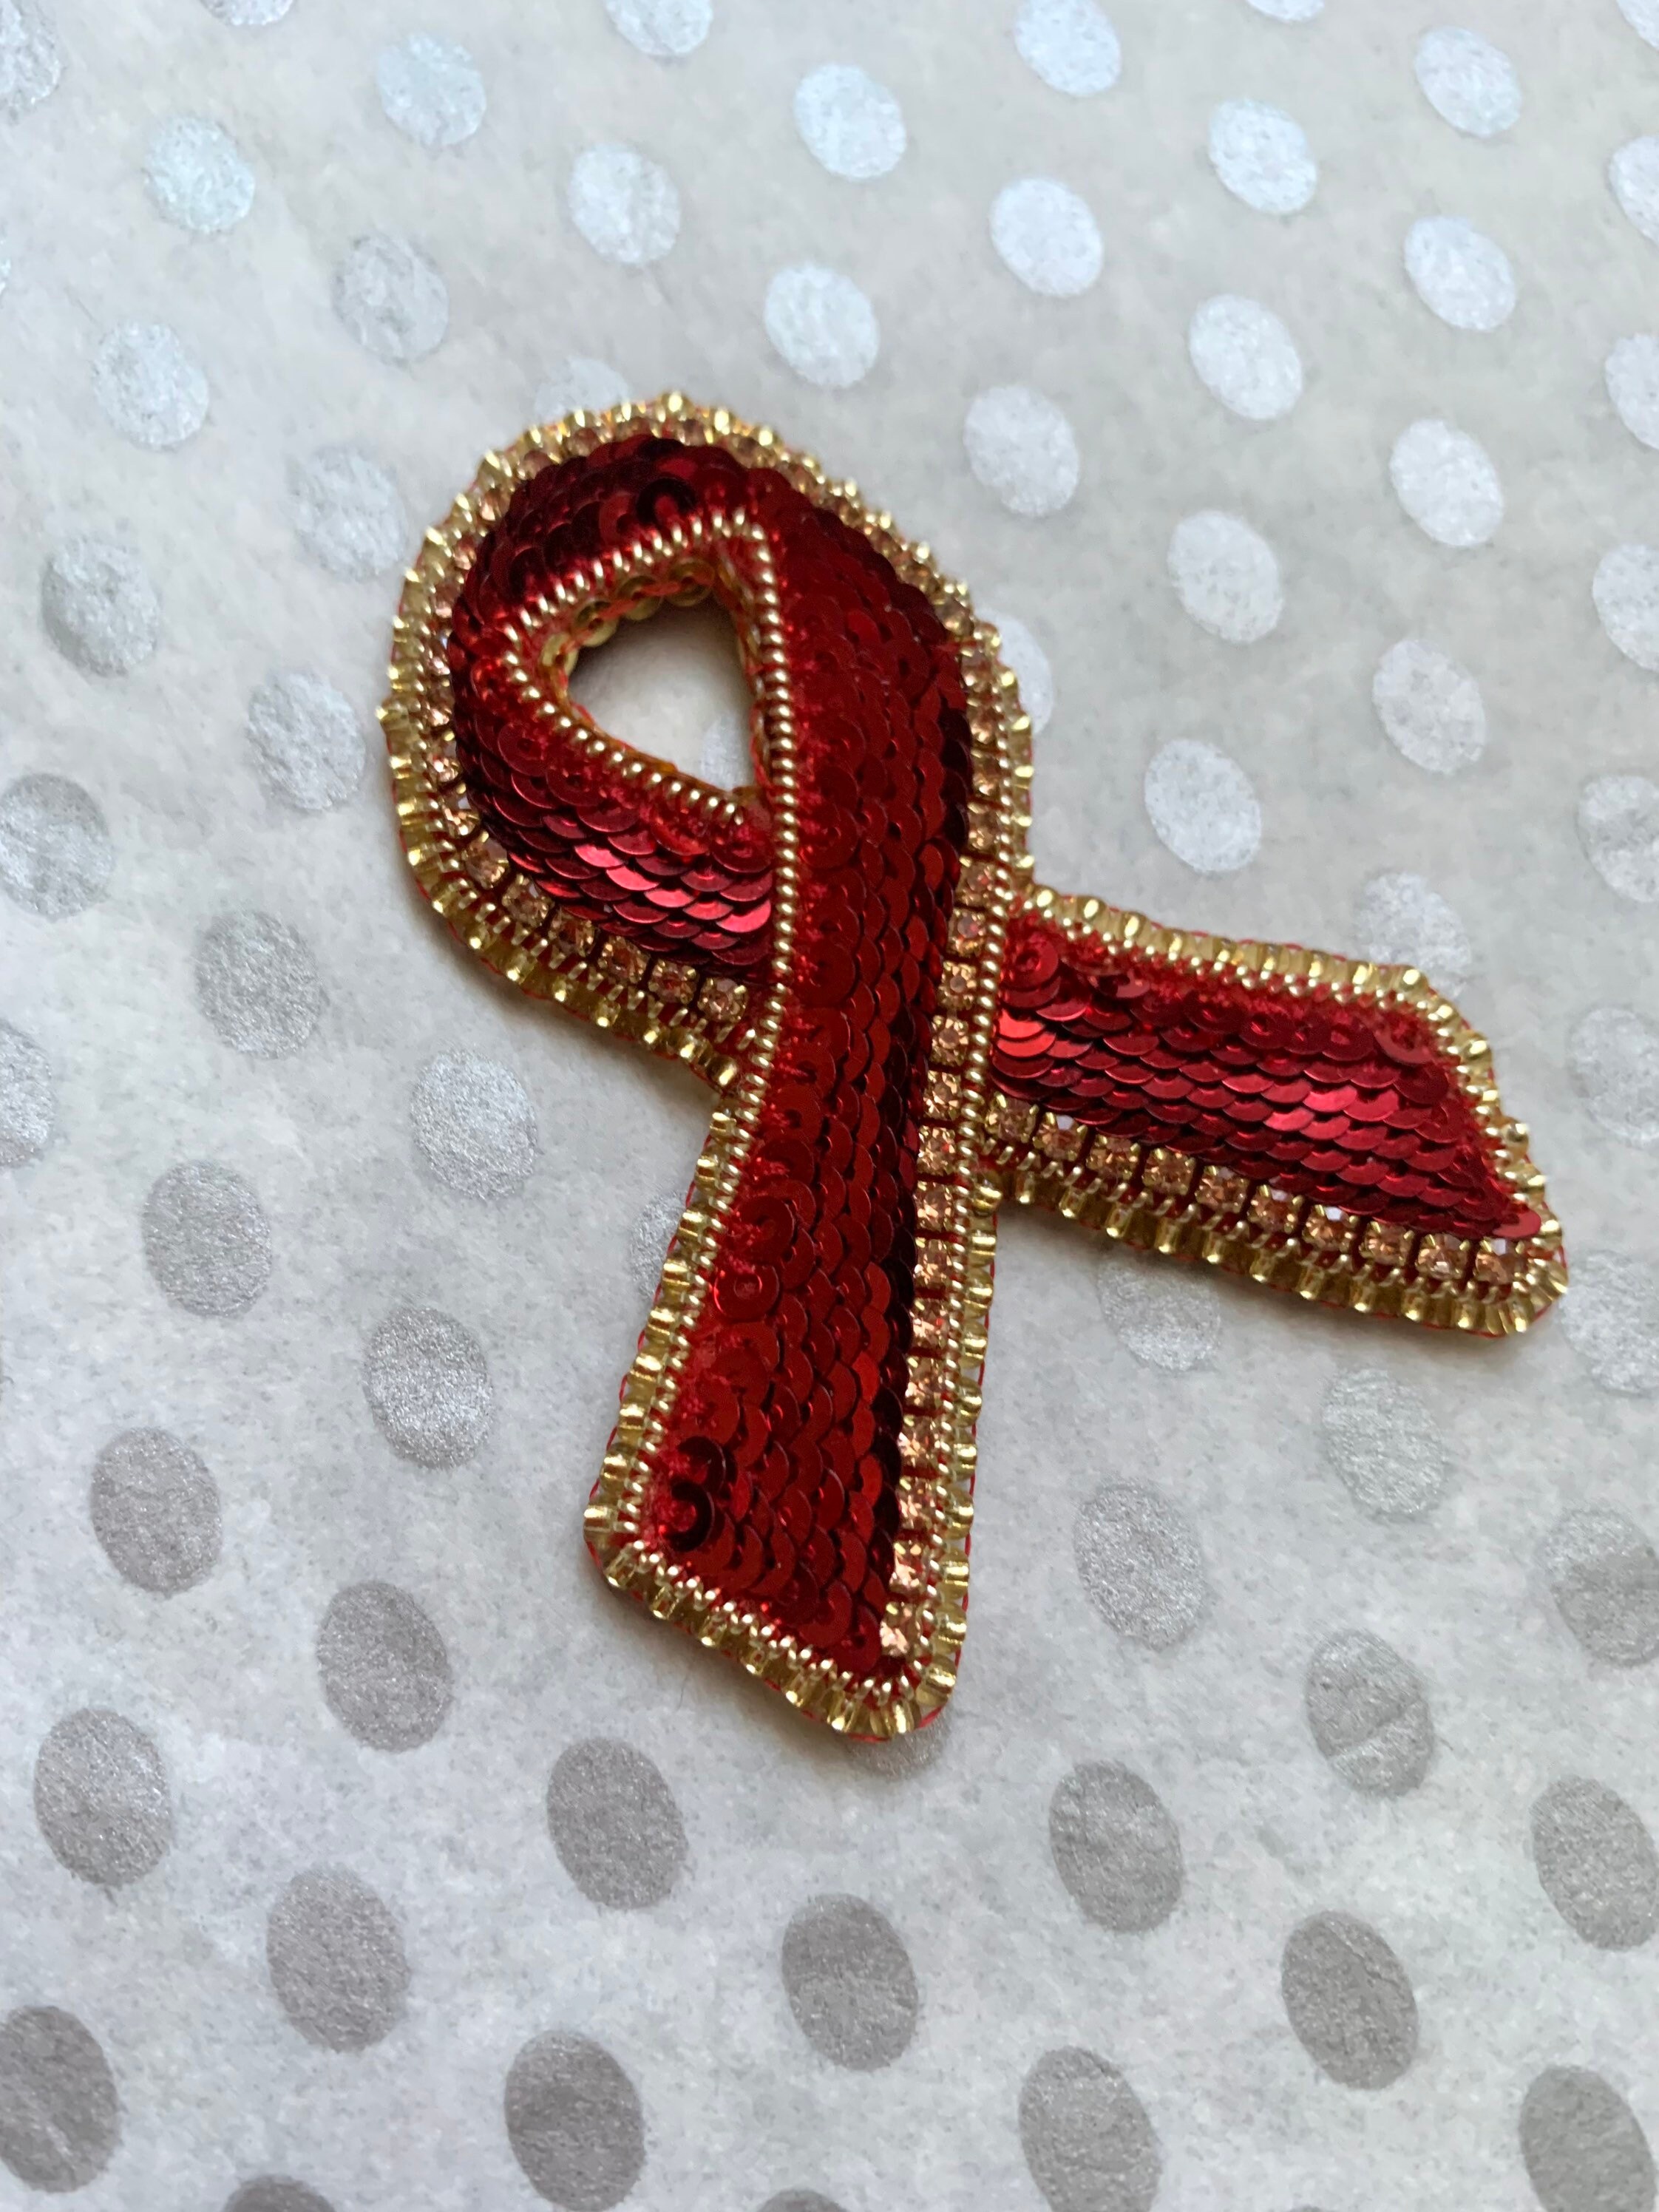 Aids, DARE, MADD Red Ribbon Week- Red and White Awareness Ribbon Pin